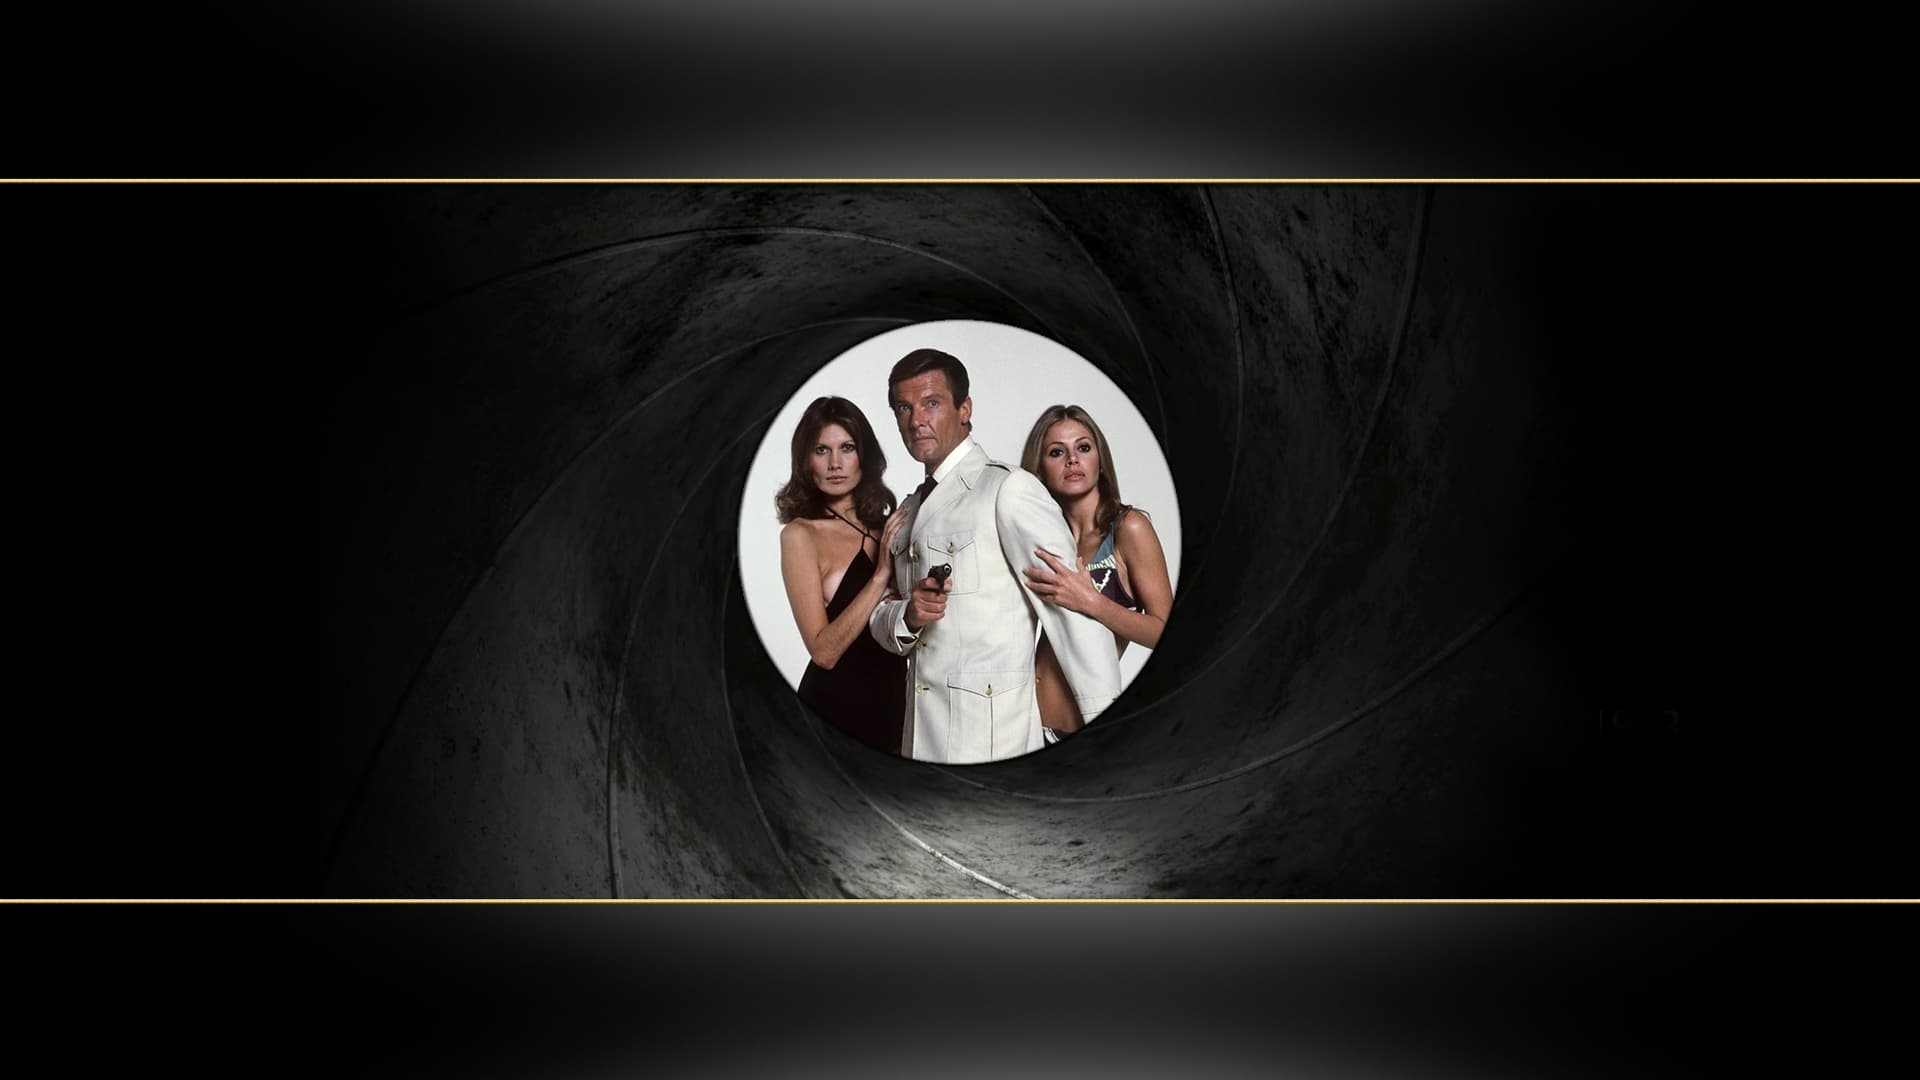 007: Людина із золотим пістолетом (The Man with the Golden Gun)